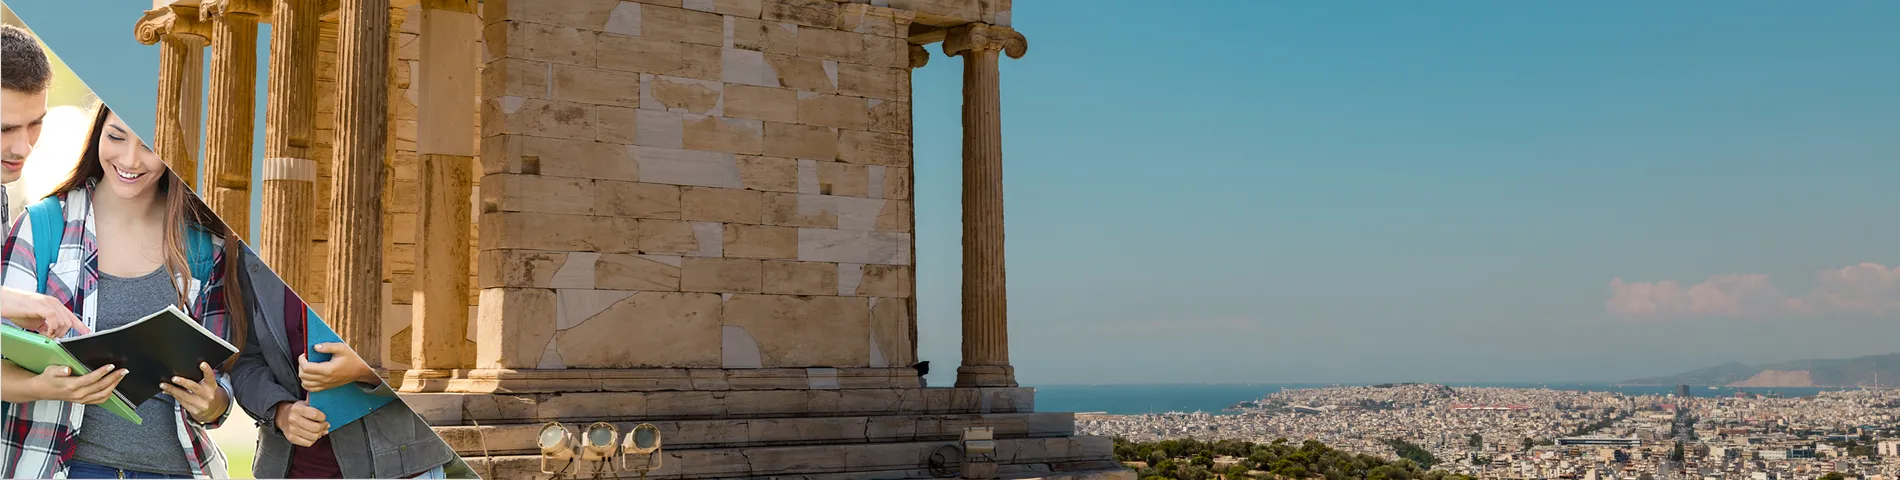 Yunanistan - Seyahat Eden Sınıf